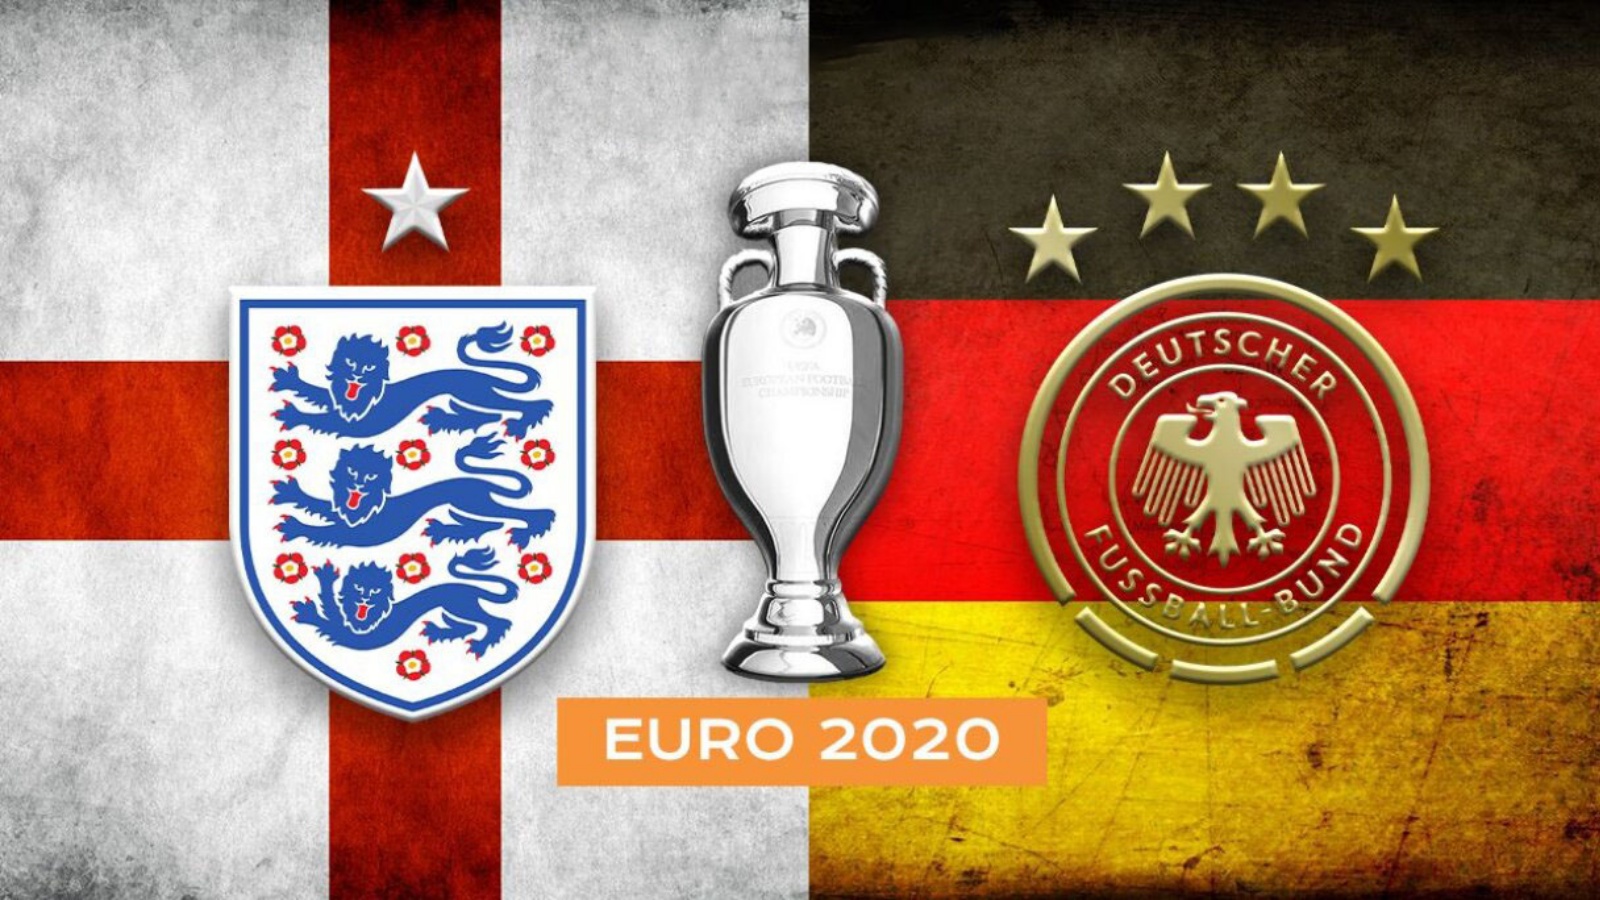 ENGELAND - DUITSLAND PRO TV LIVE EURO 2020